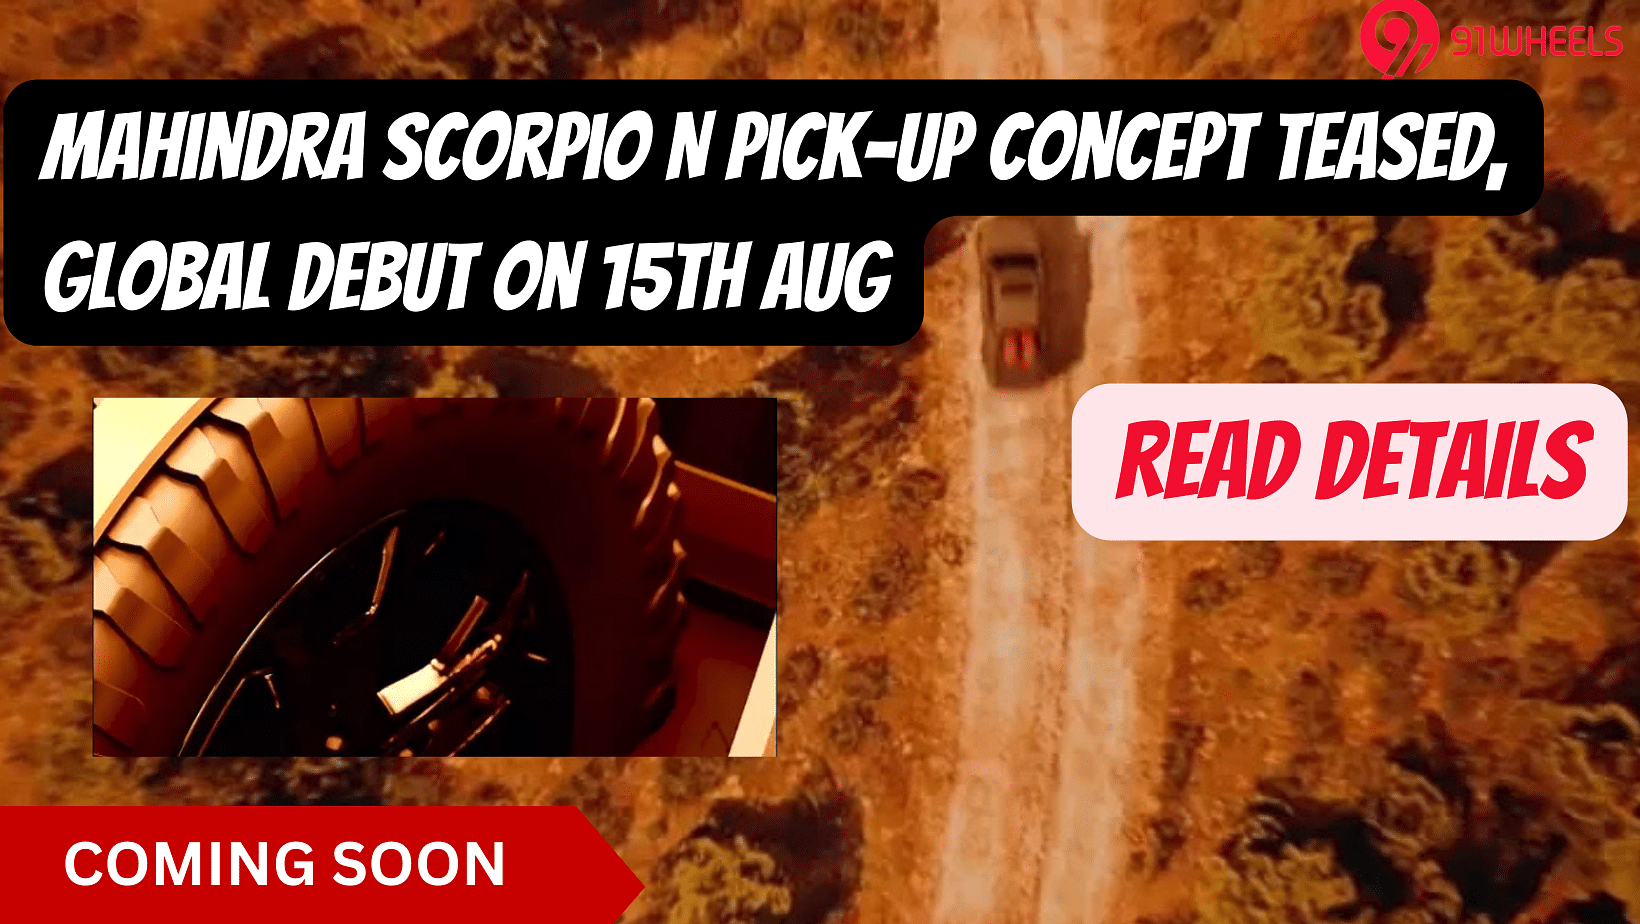 Mahindra Scorpio N Pick-Up Concept Teased: Global Debut On 15th Aug